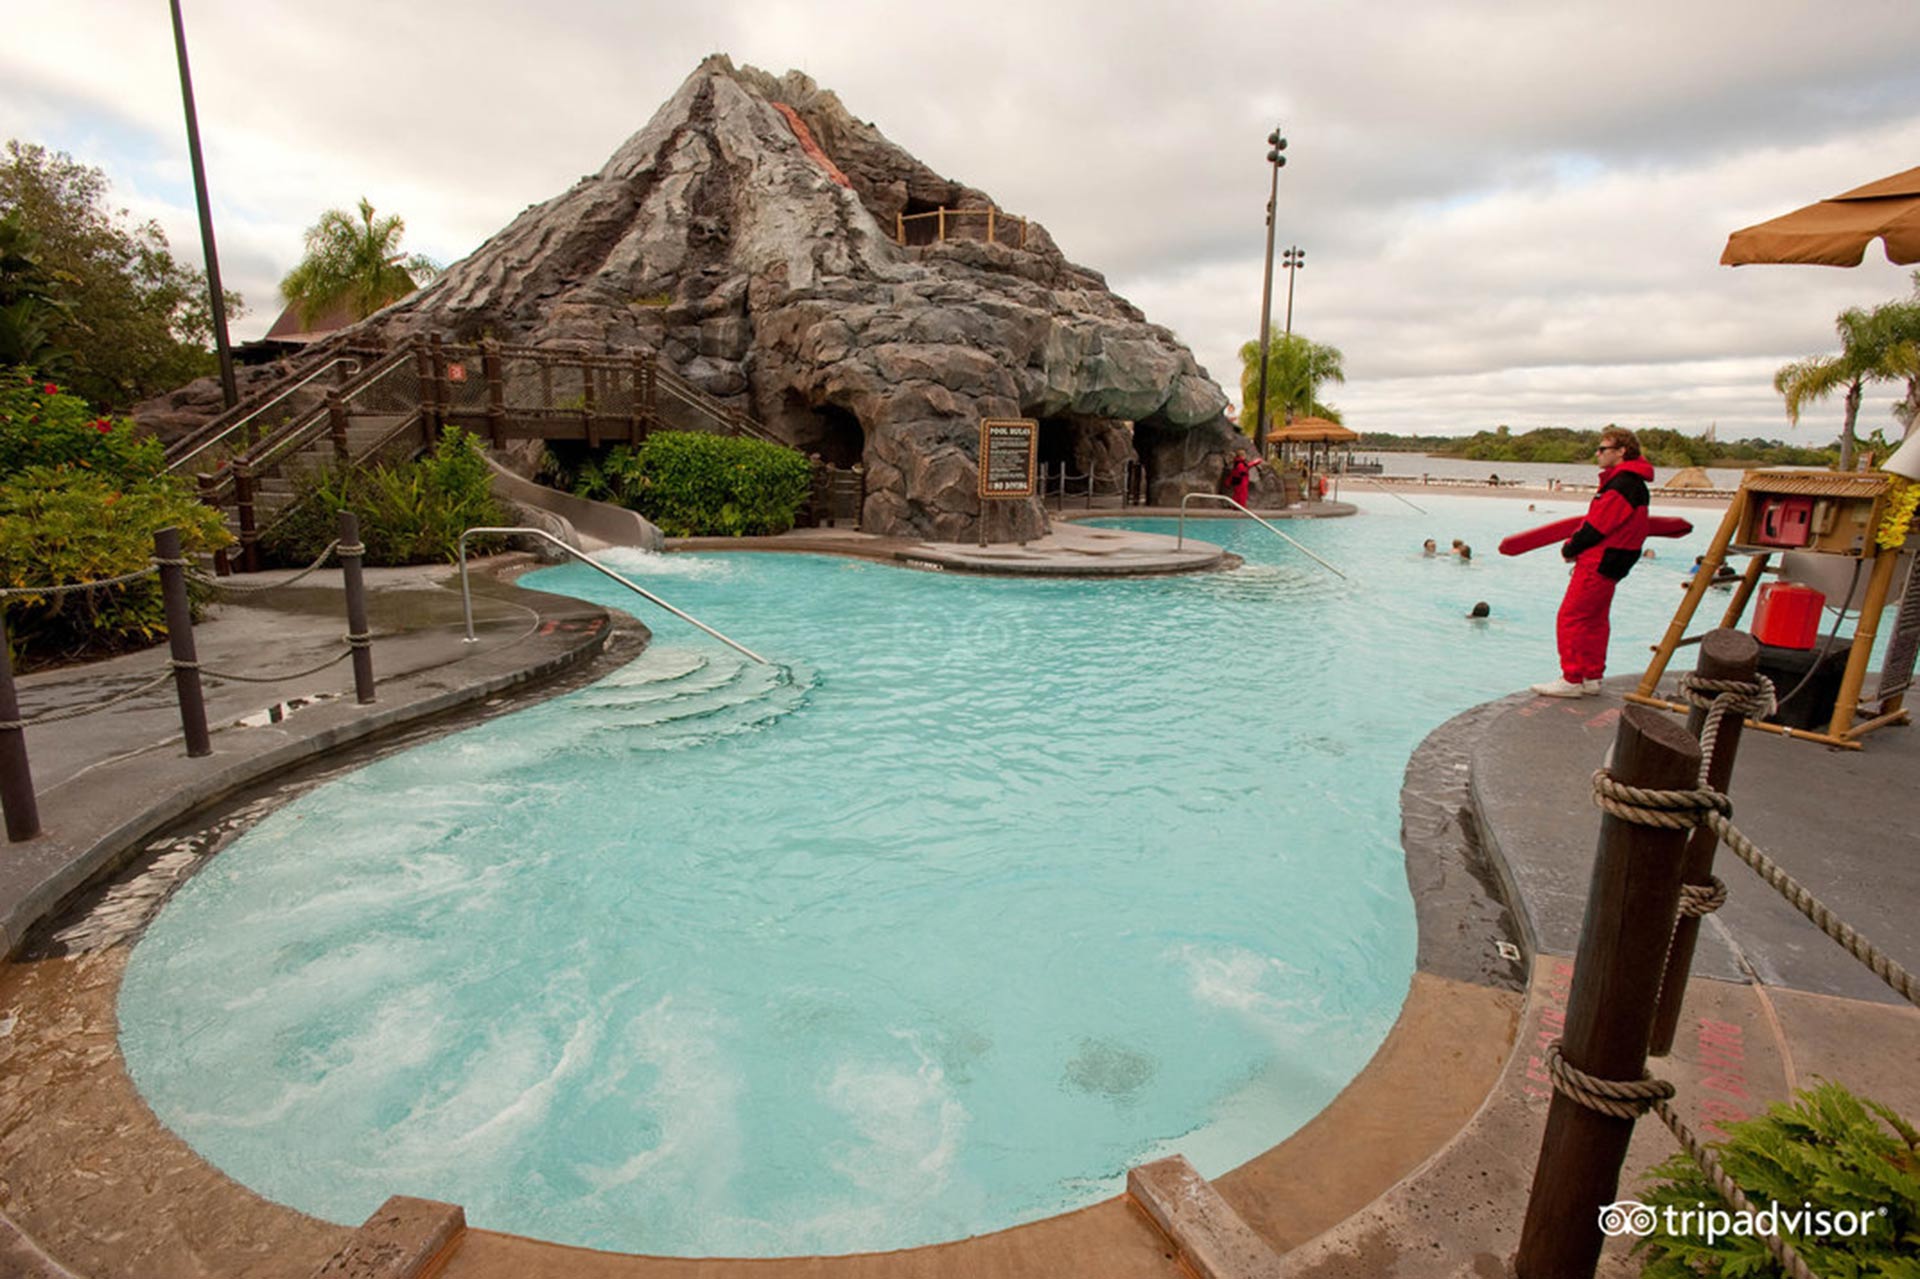 The Lava Pool at Disney's Polynesian Village Resort in Florida